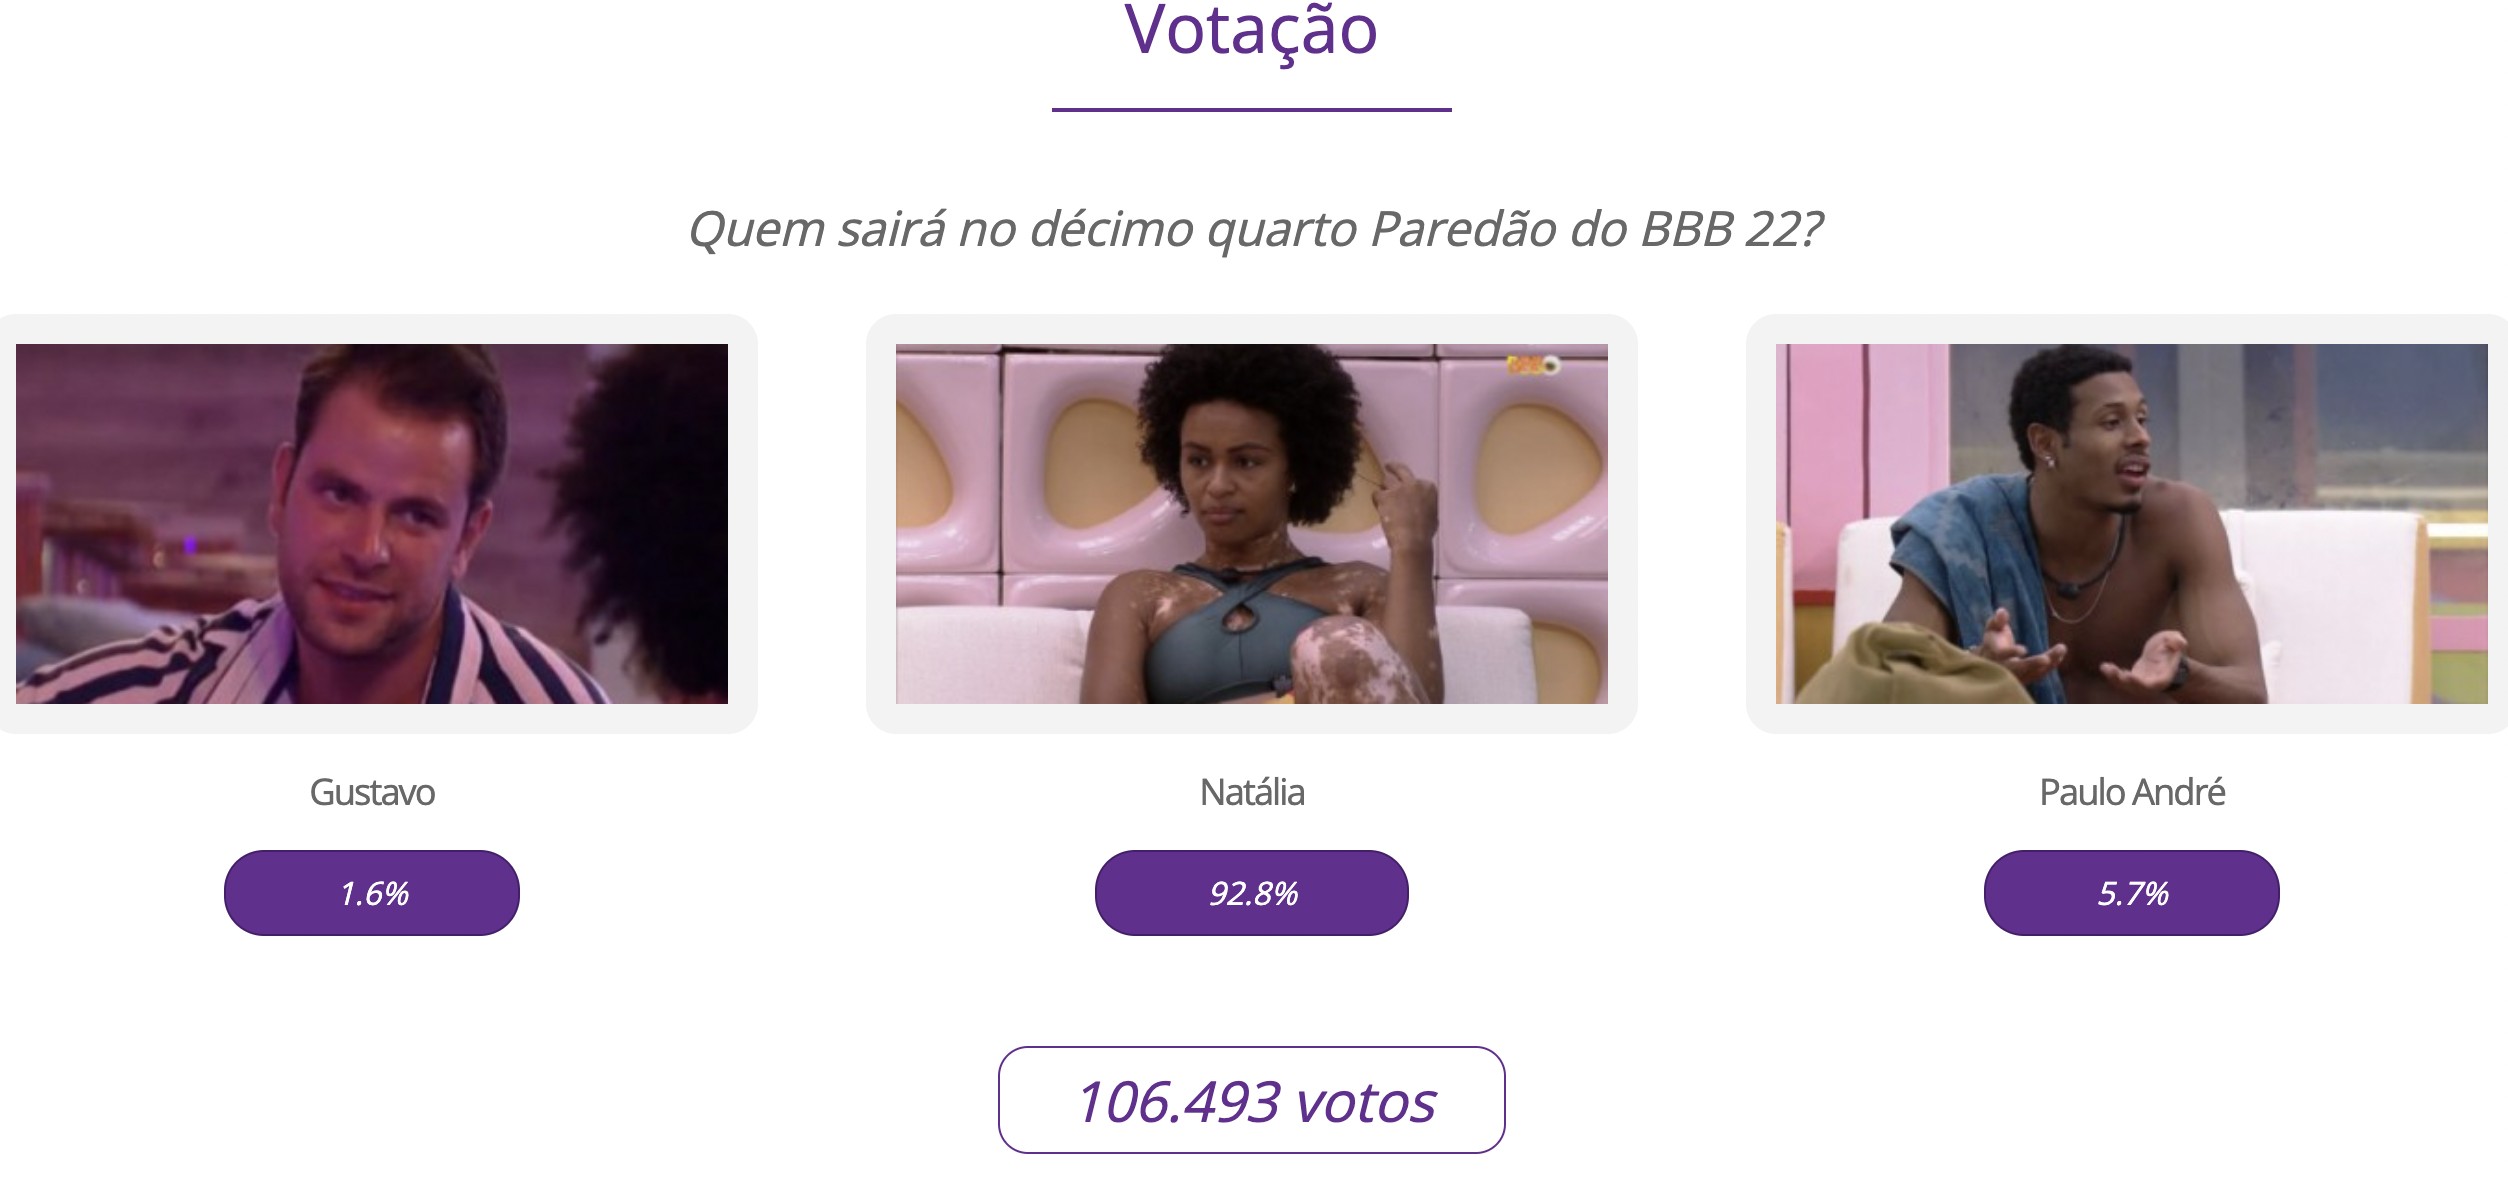 Resultado parcial votação Paredão BBB 22: Gustavo x Natália x Paulo André